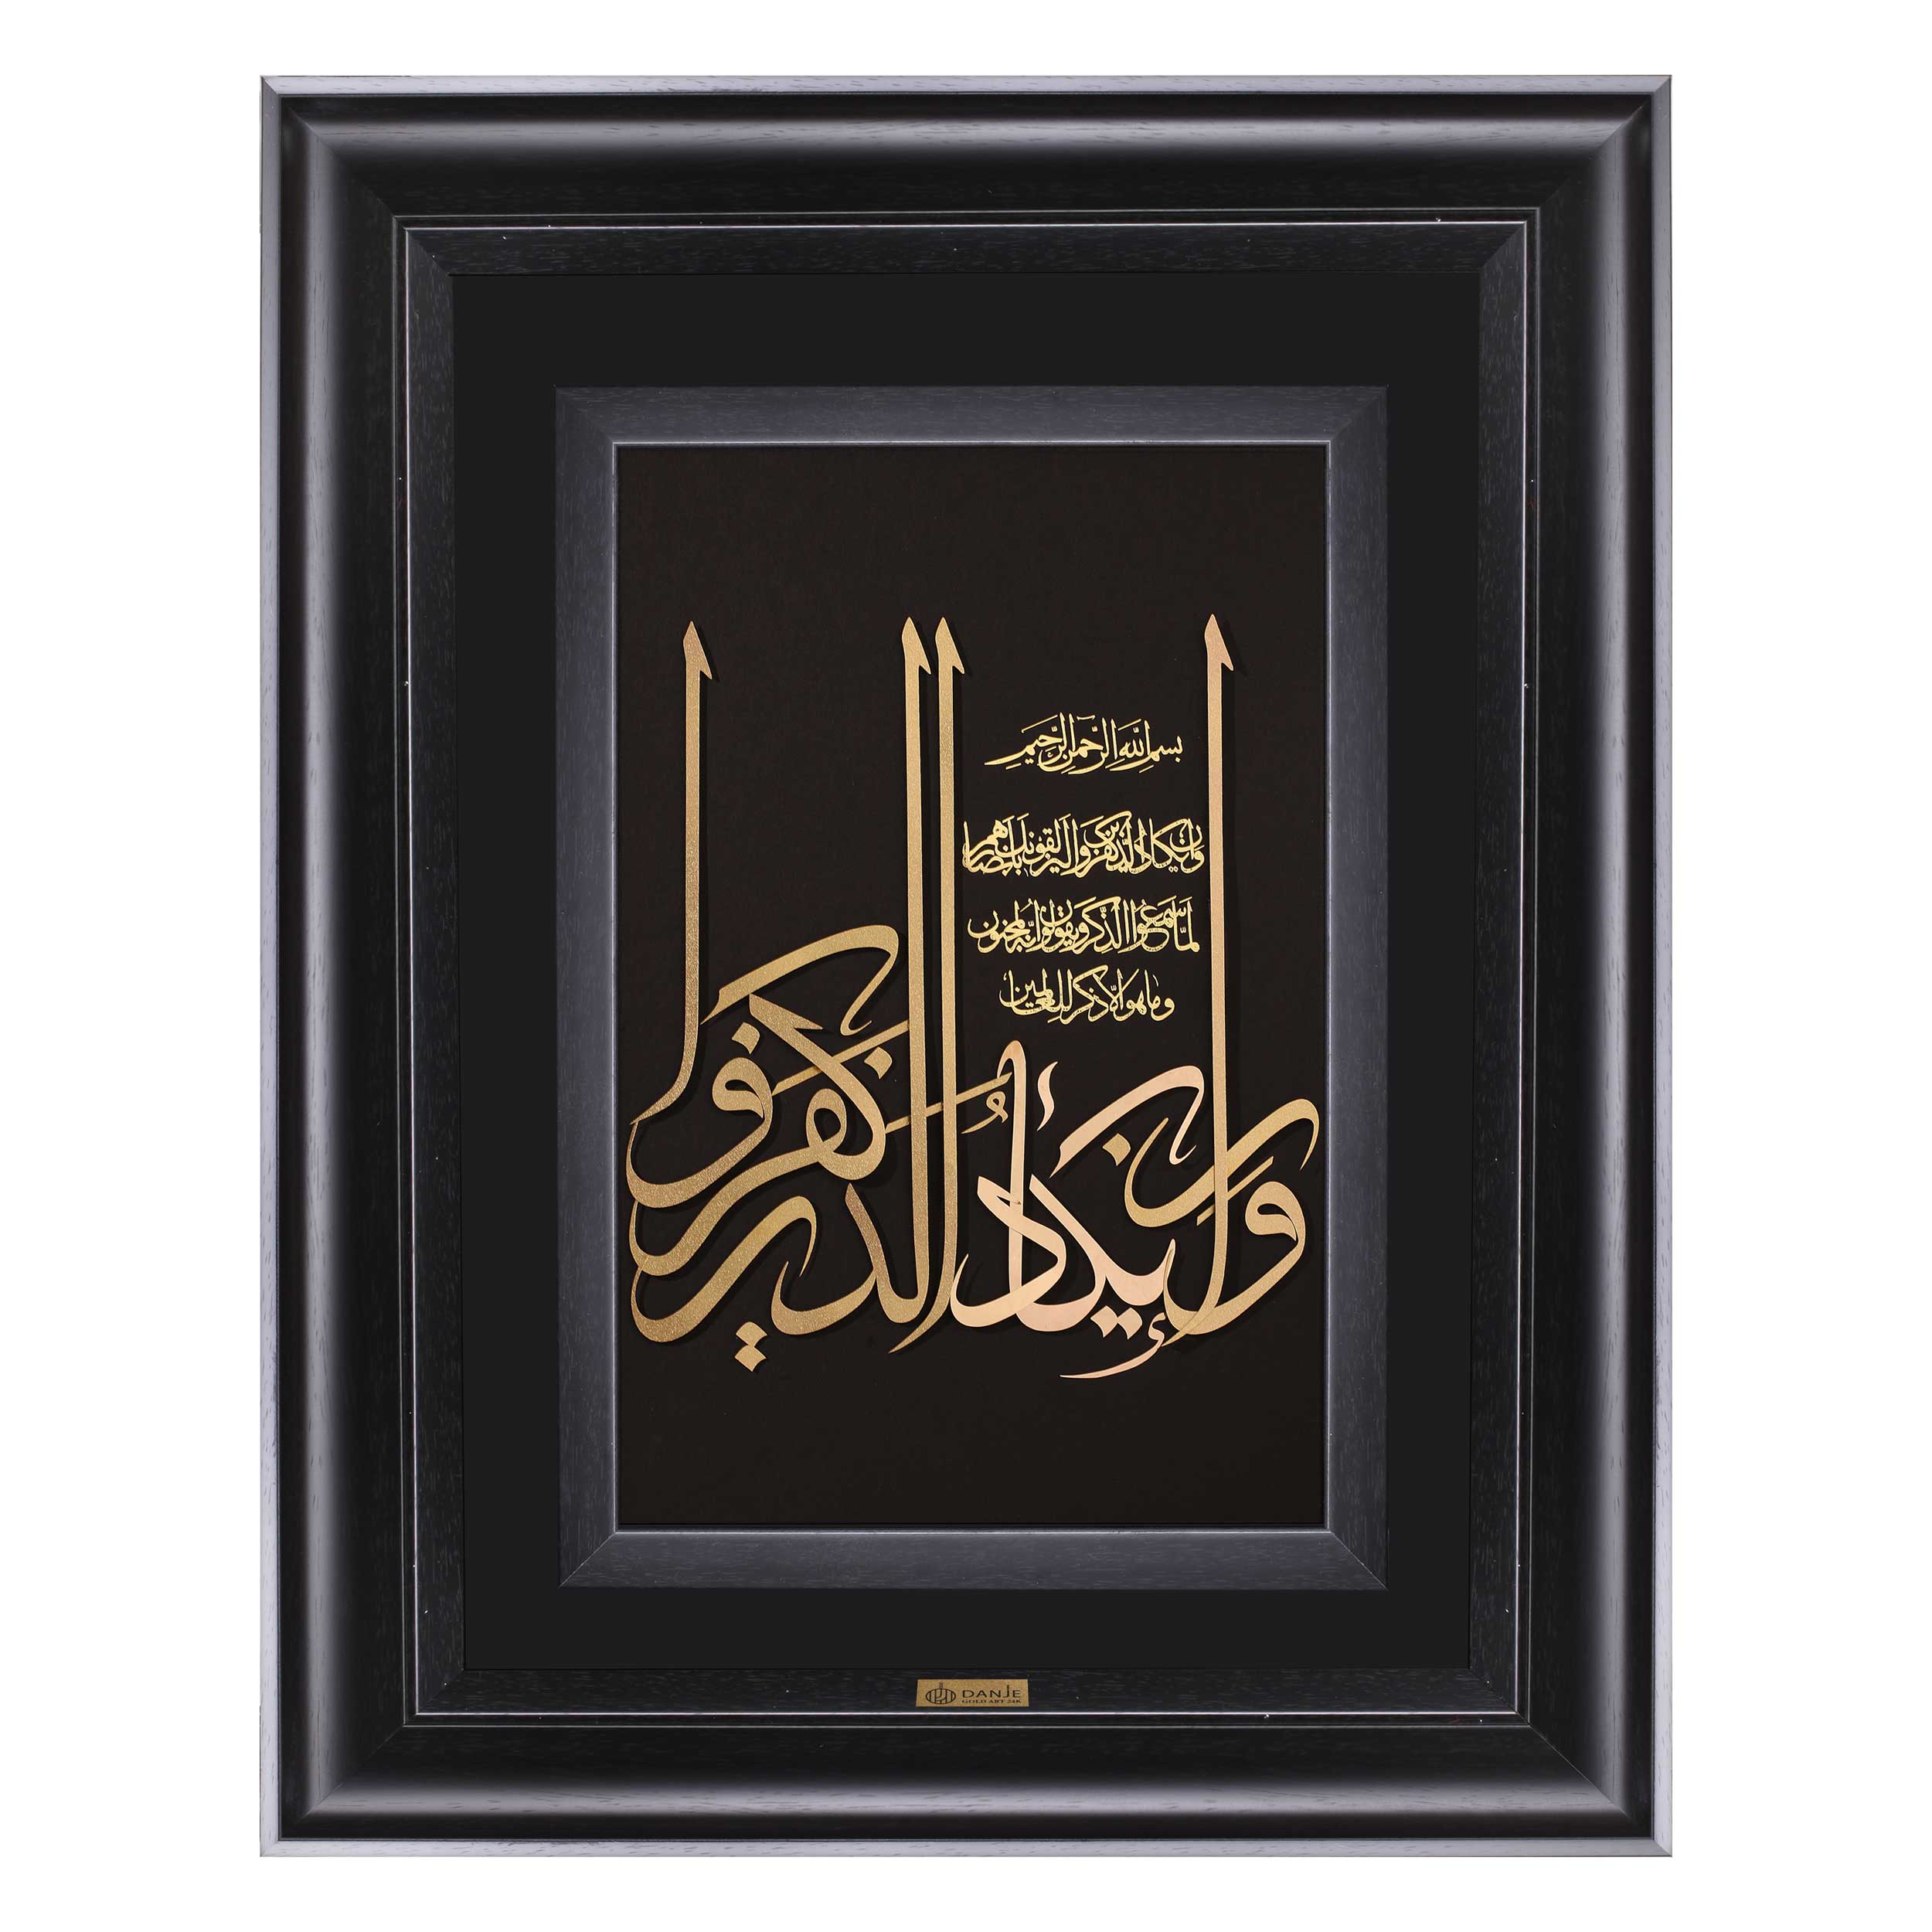 24-carat gold leaf panel and PVC frame, one-piece design, Danjeh brand